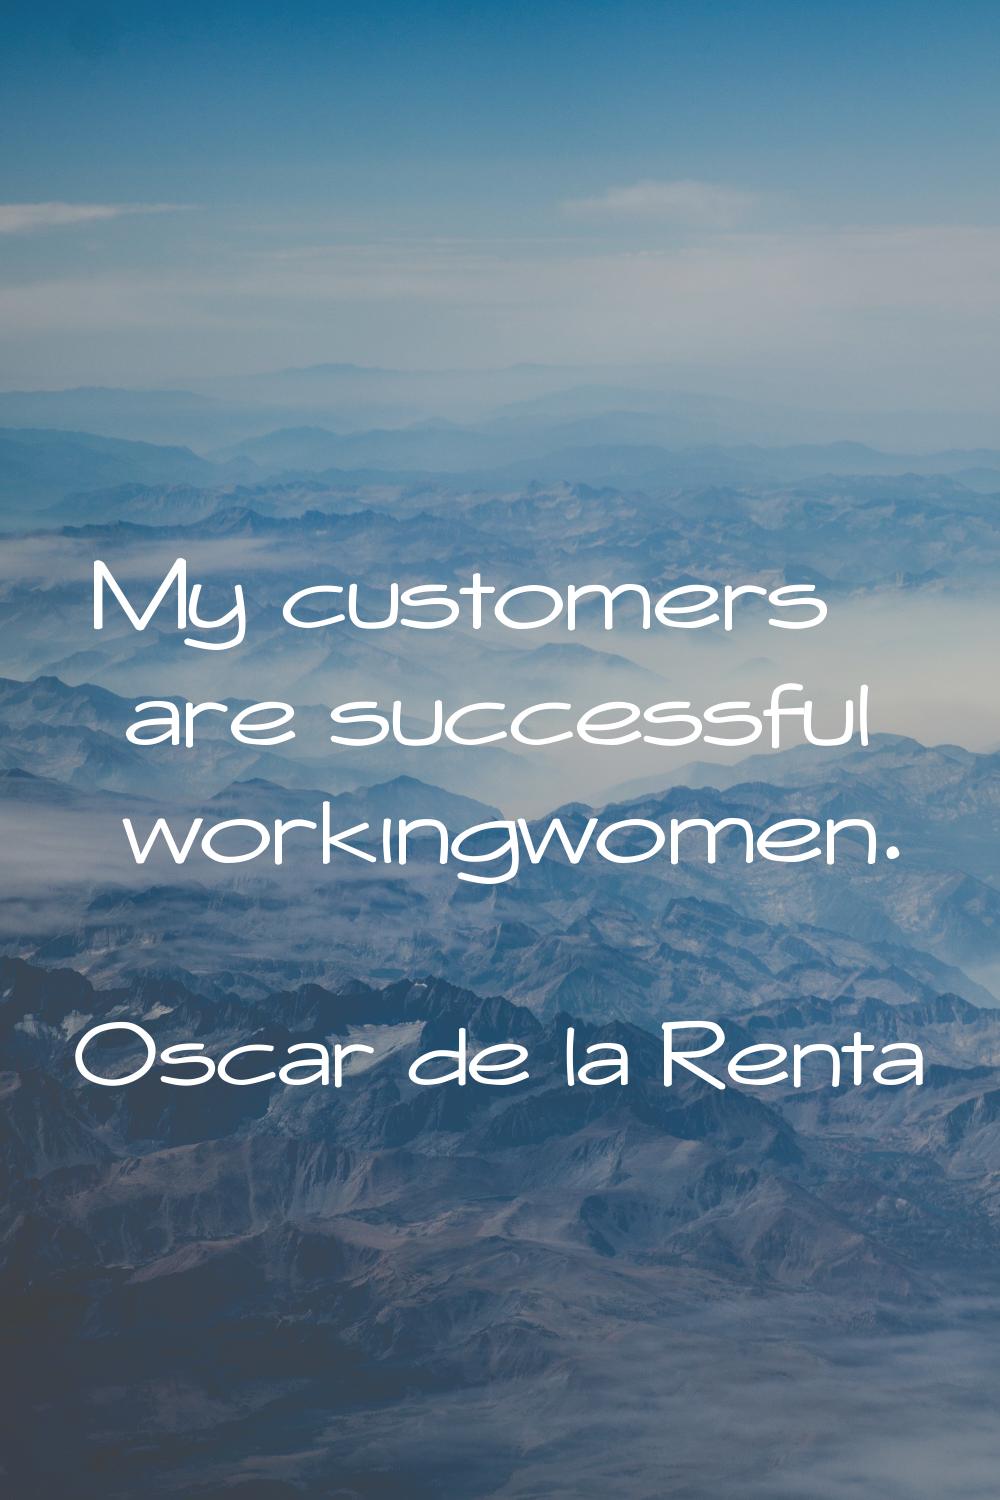 My customers are successful workingwomen.